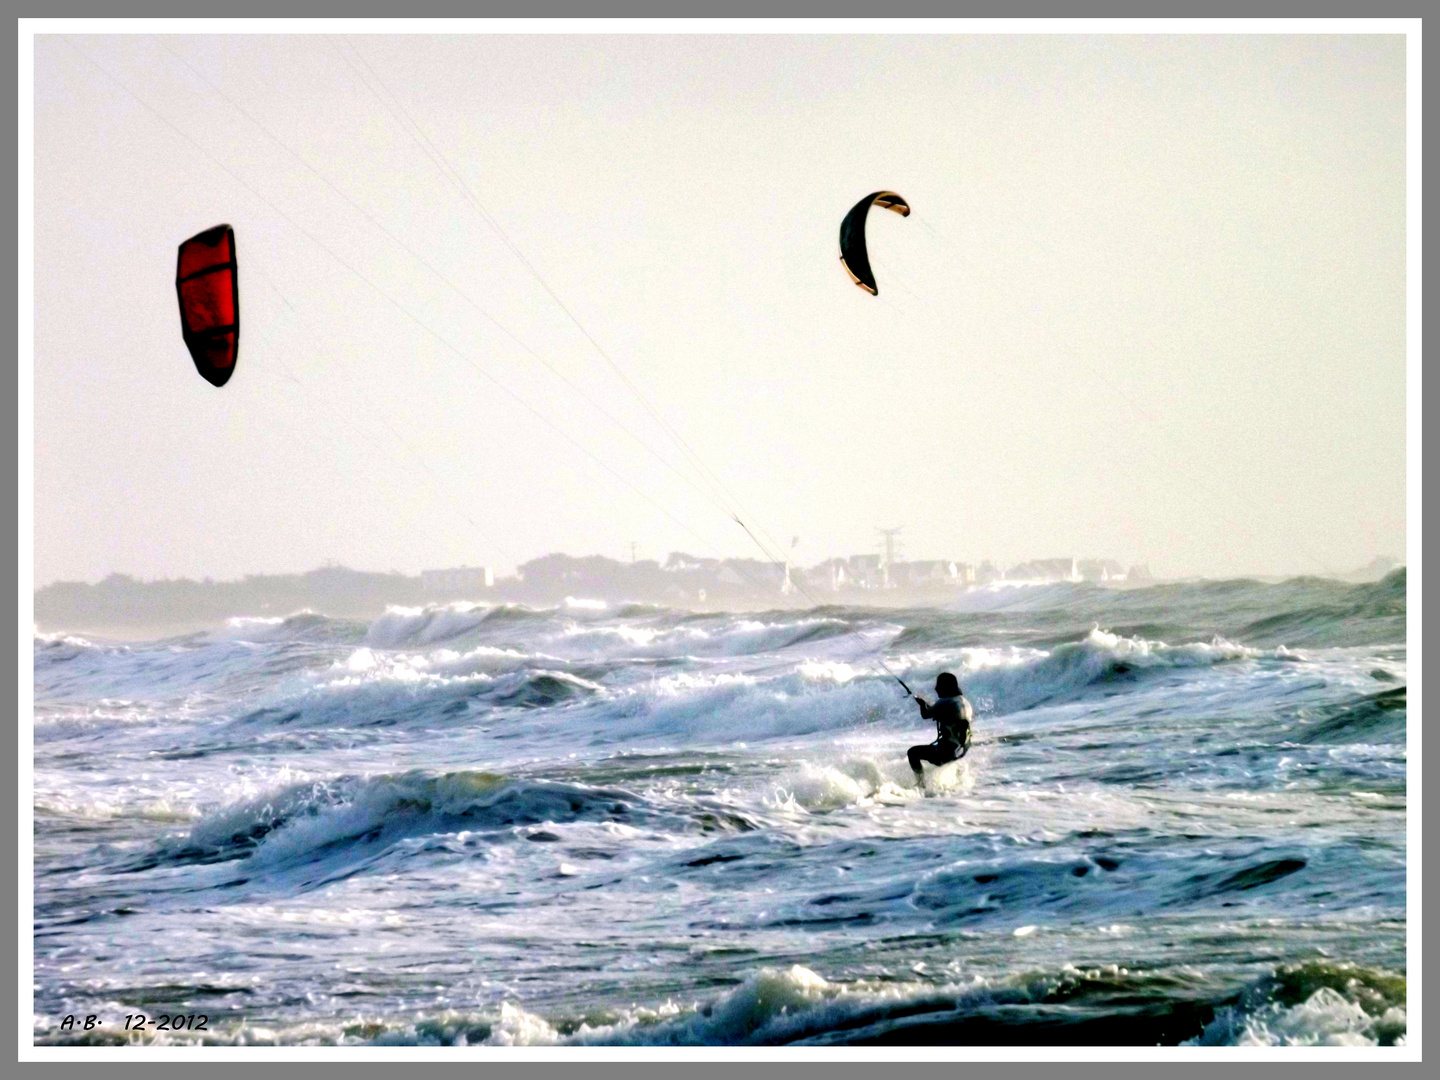 Le kitesurfeur - Erdeven 12-2012